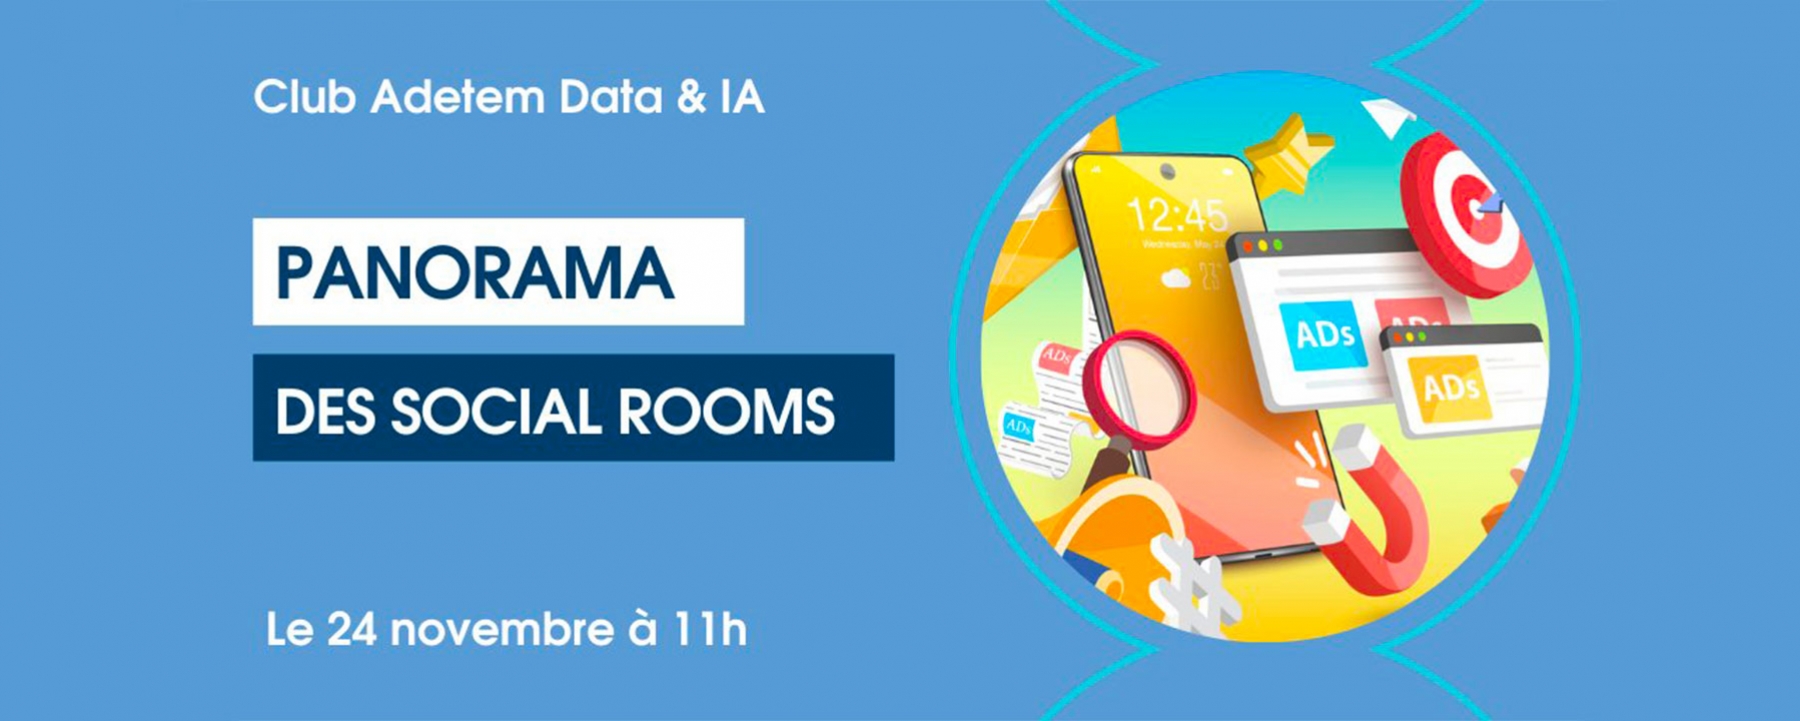 Panorama des Social Rooms Adetem le 24 novembre 2021